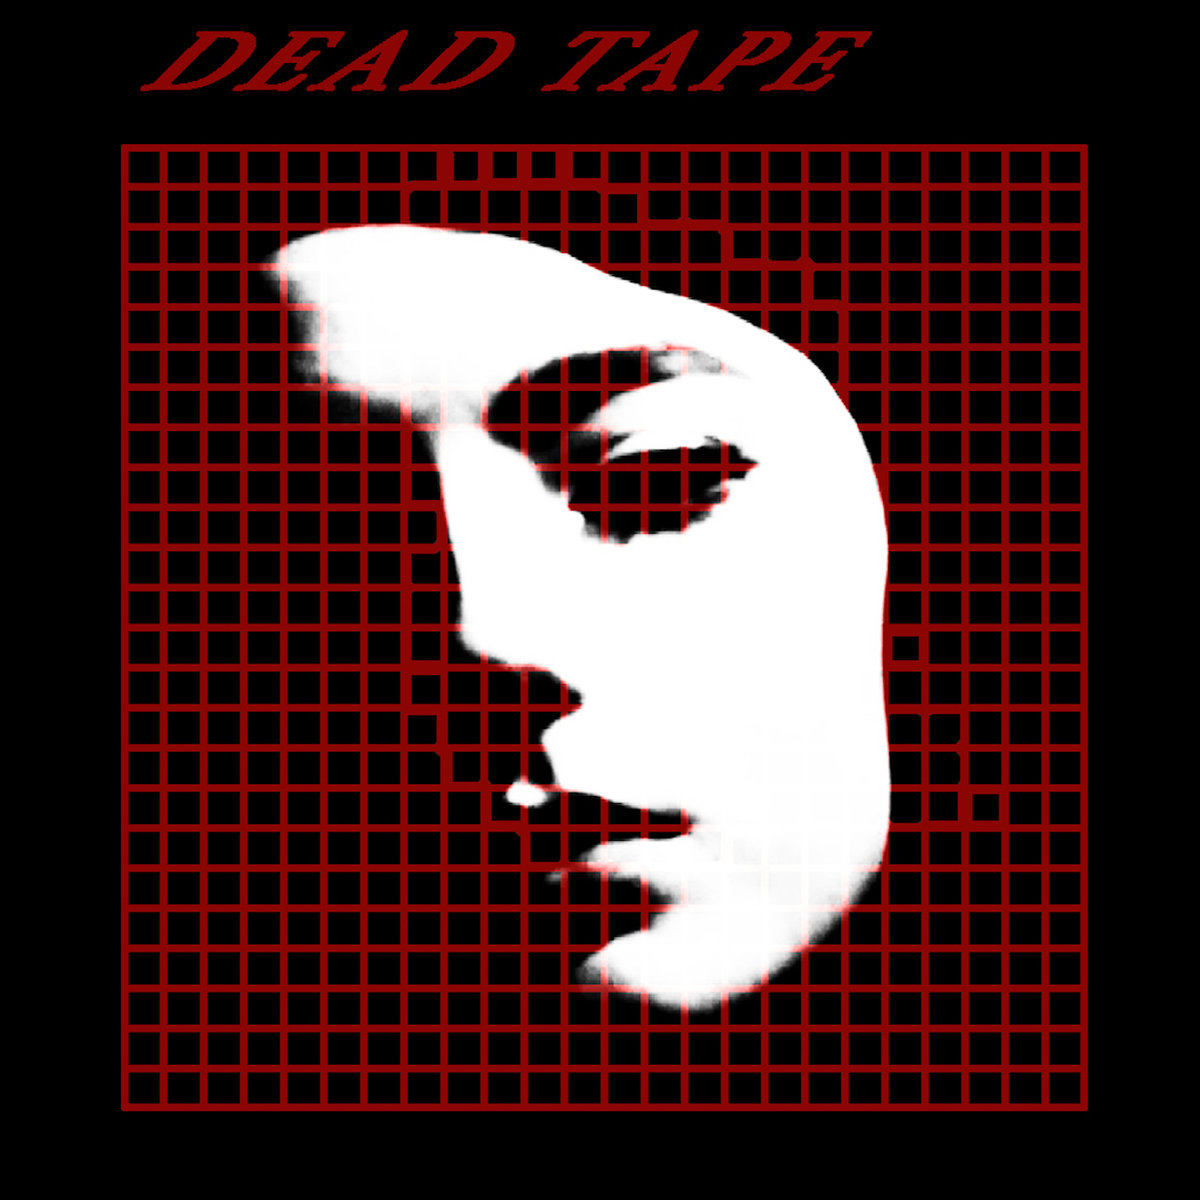 Dead Tape cover